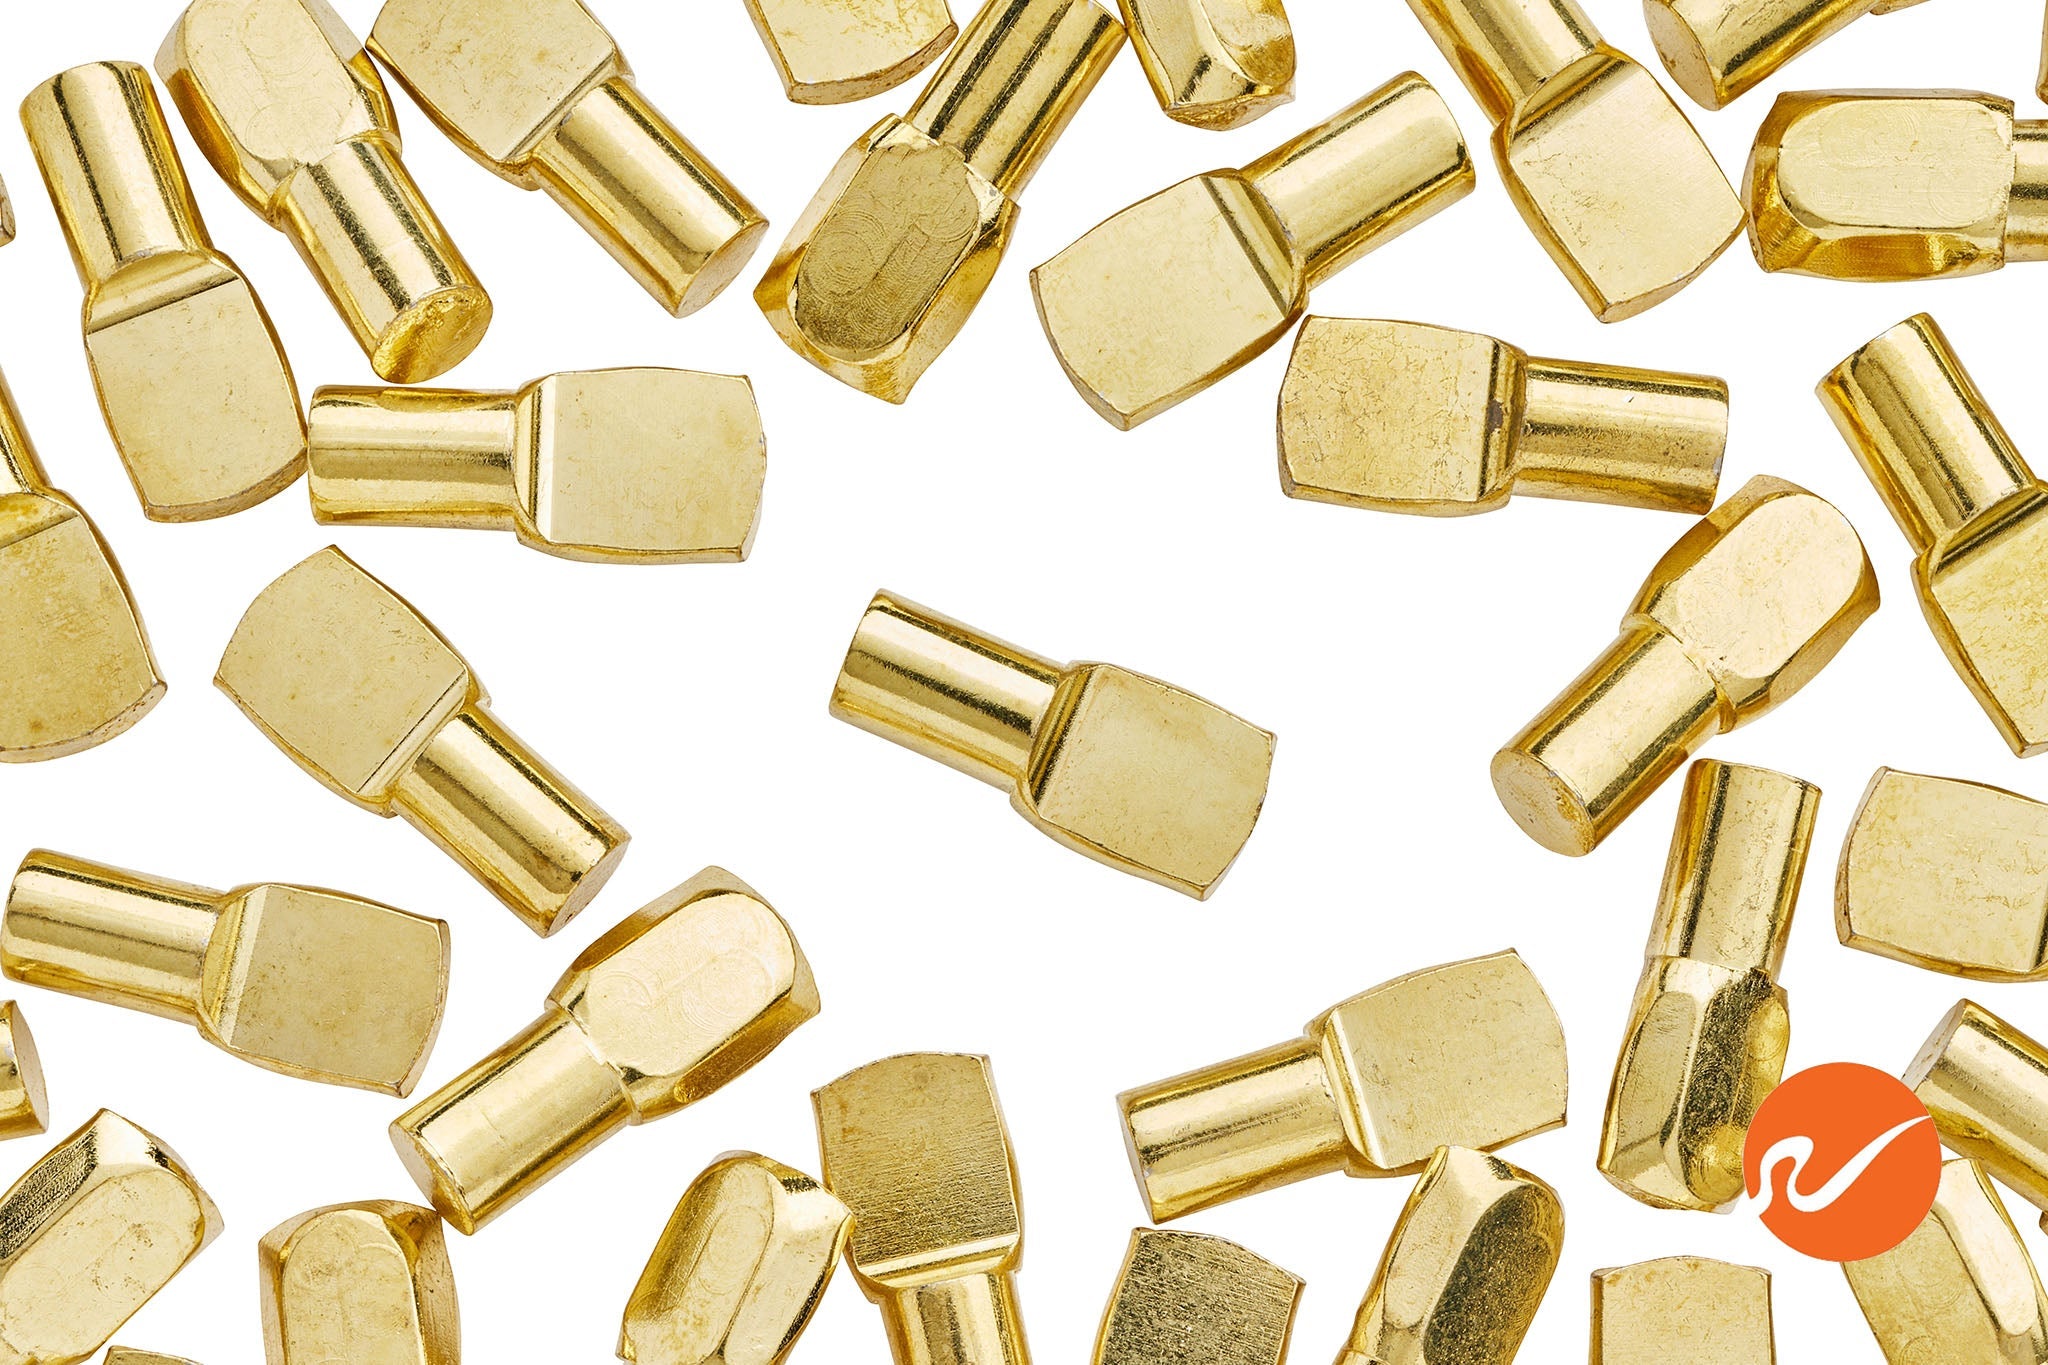 7mm Brass Shelf Pins - WidgetCo